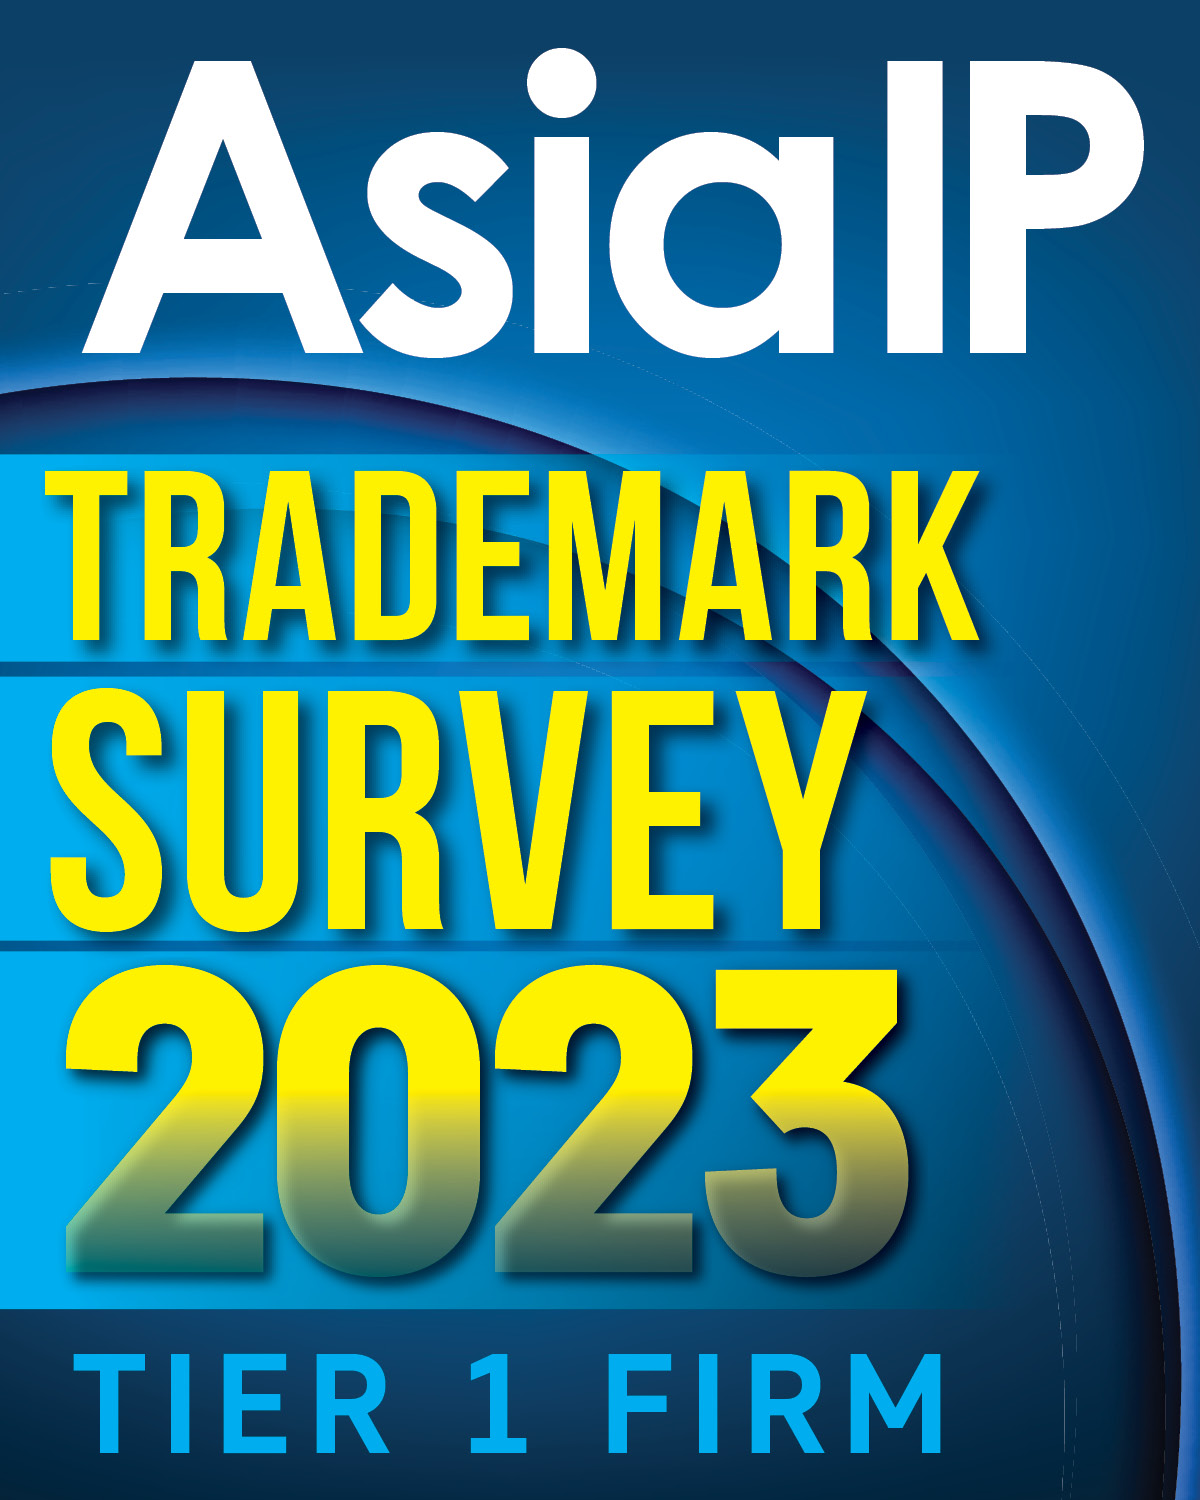 Asia IP Trademark Survey 2023 logo - Tier 1 Firm.jpg